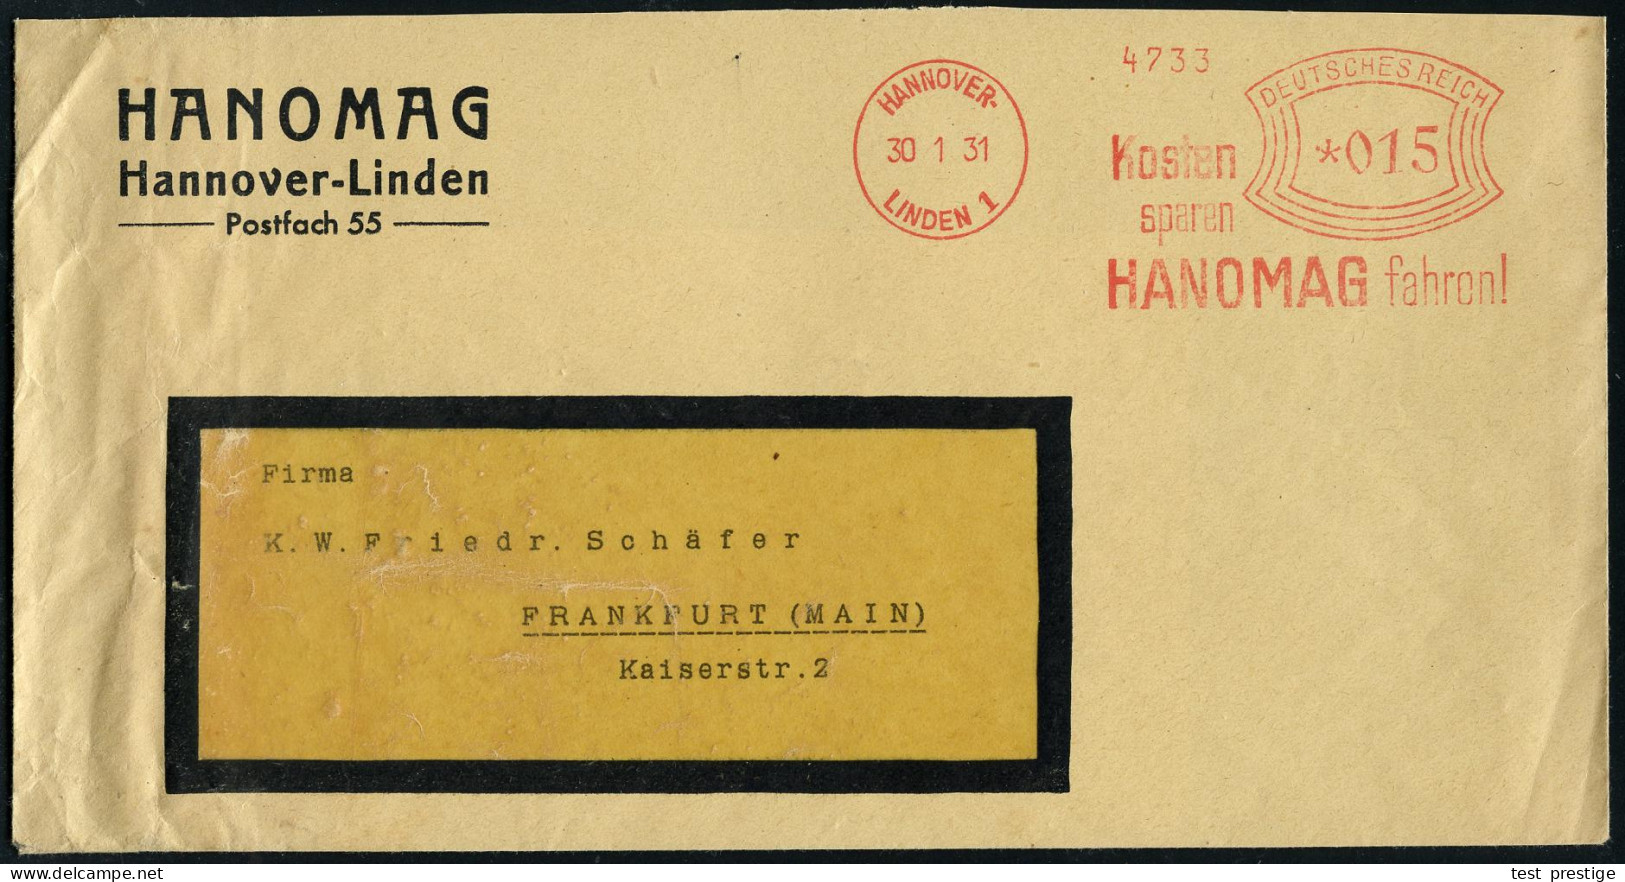 HANNOVER-/ LINDEN 1/ Kosten/ Sparen/ HANOMAG Fahren! 1931 (30.1.) AFS Francotyp Auf Firmen-Bf.: HANOMAG.. = Hersteller V - LKW